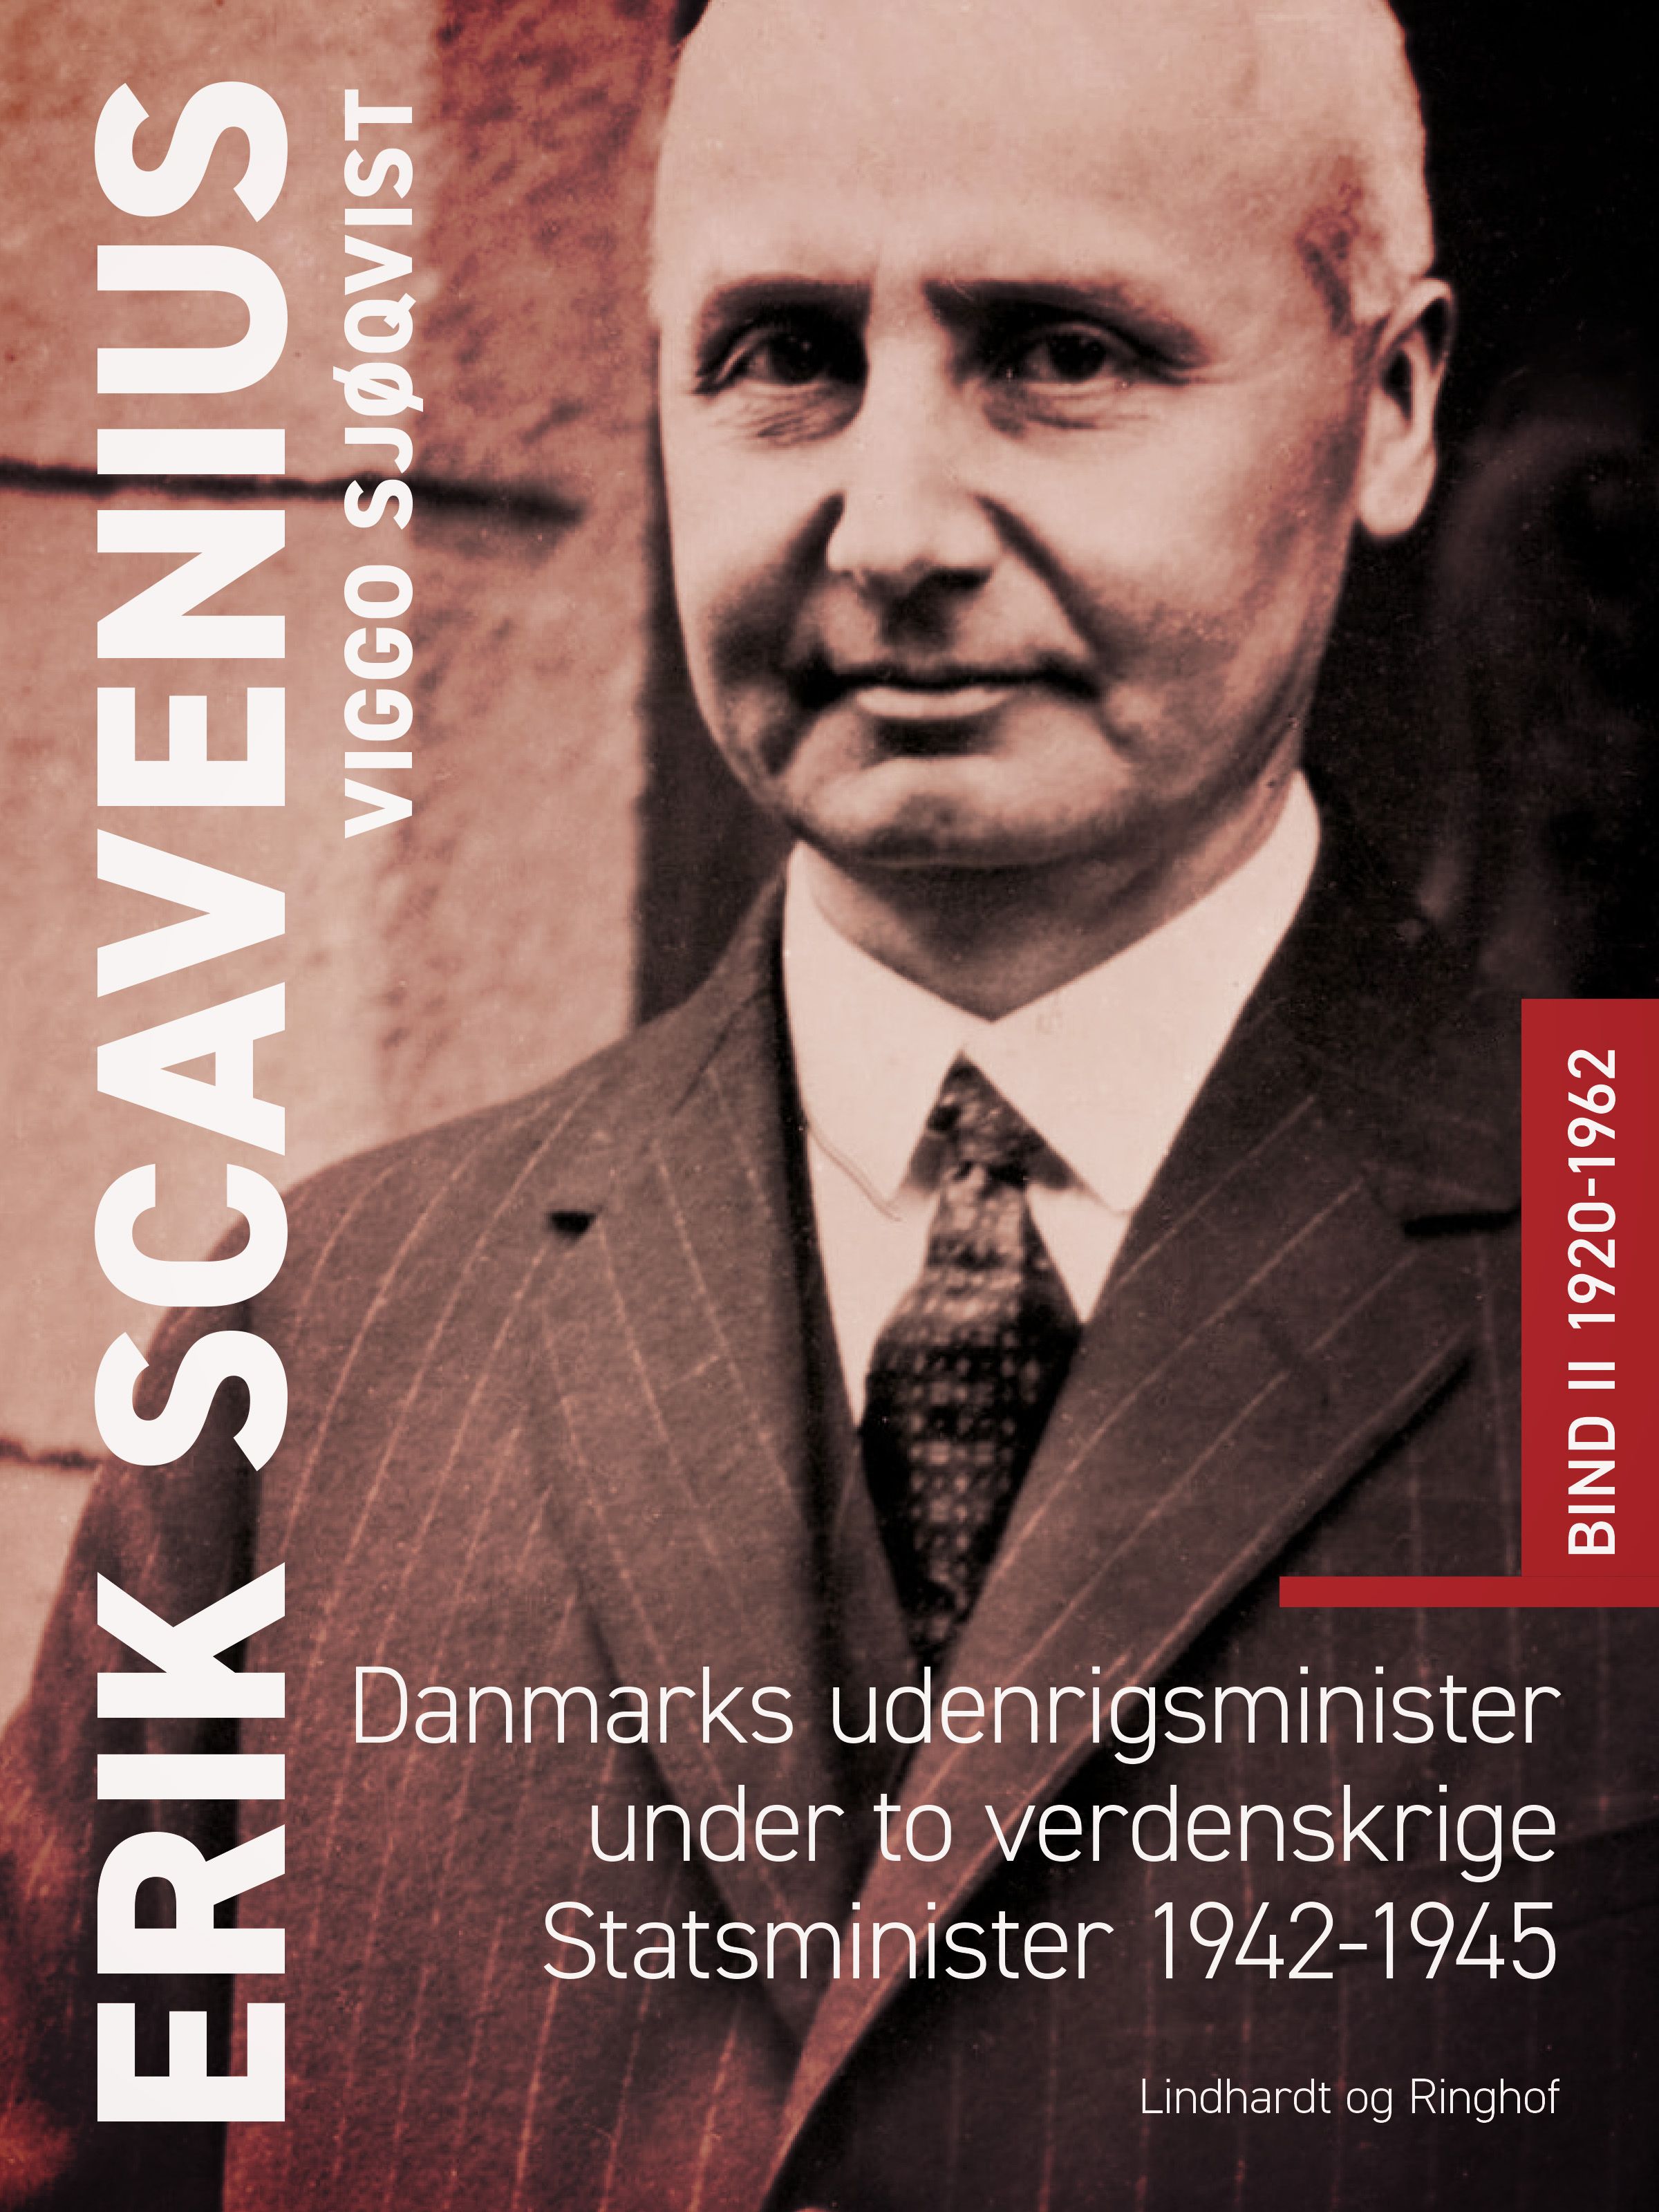 Erik Scavenius. Danmarks udenrigsminister under to verdenskrige. Statsminister 1942-1945. Bind II 1920-1962, eBook by Viggo Sjøqvist